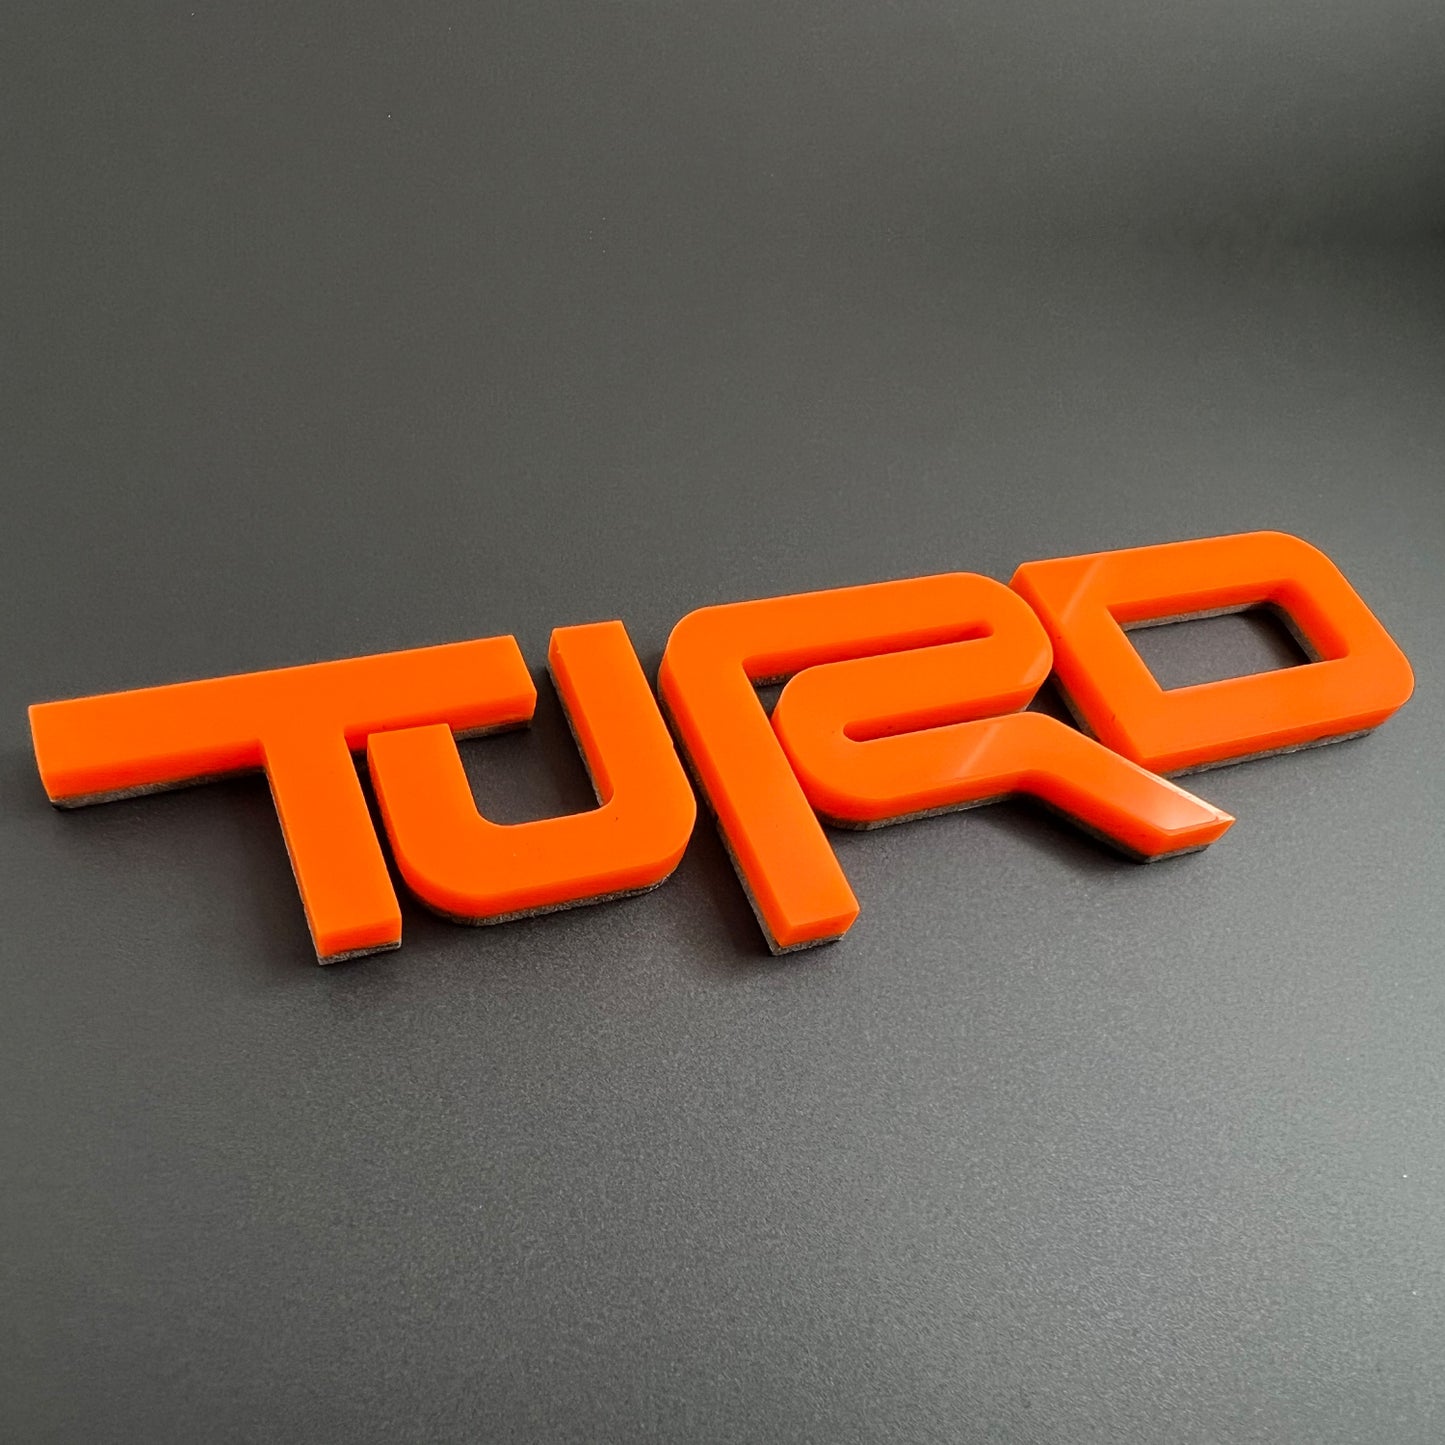 ONE (1) TURD Car Truck Emblem Badge Fits Toyota FJ Tacoma 4runner Tundra 40 Land Cruiser Camry